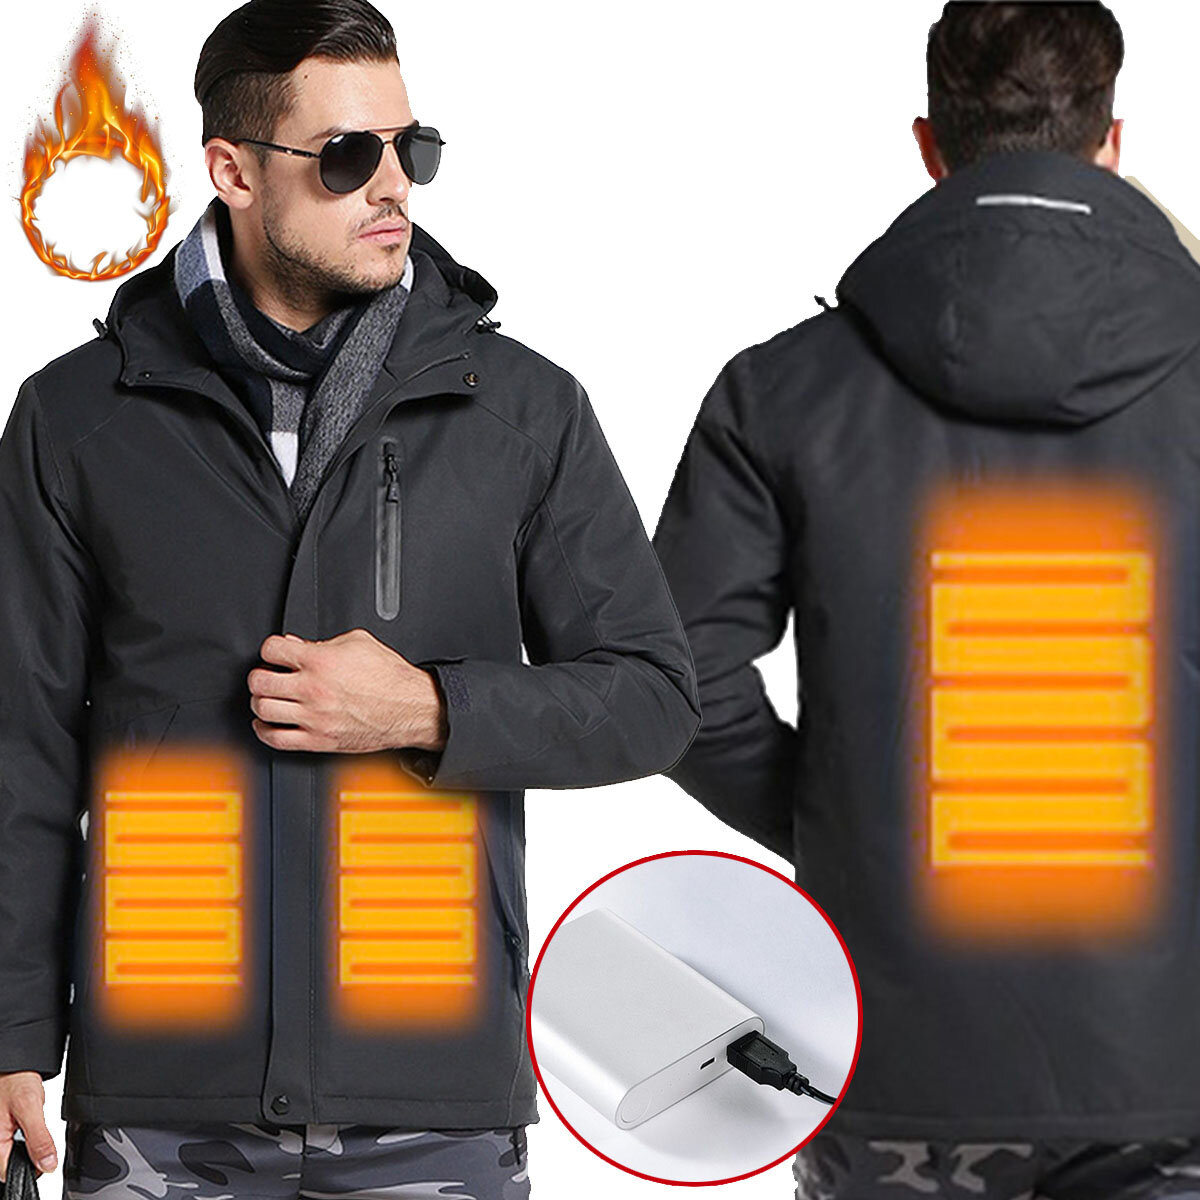 TENGOO Warm-E Electronic Heated Jacket Intelligent USB Heating Adjustable Temperature Waterproof Work Coat